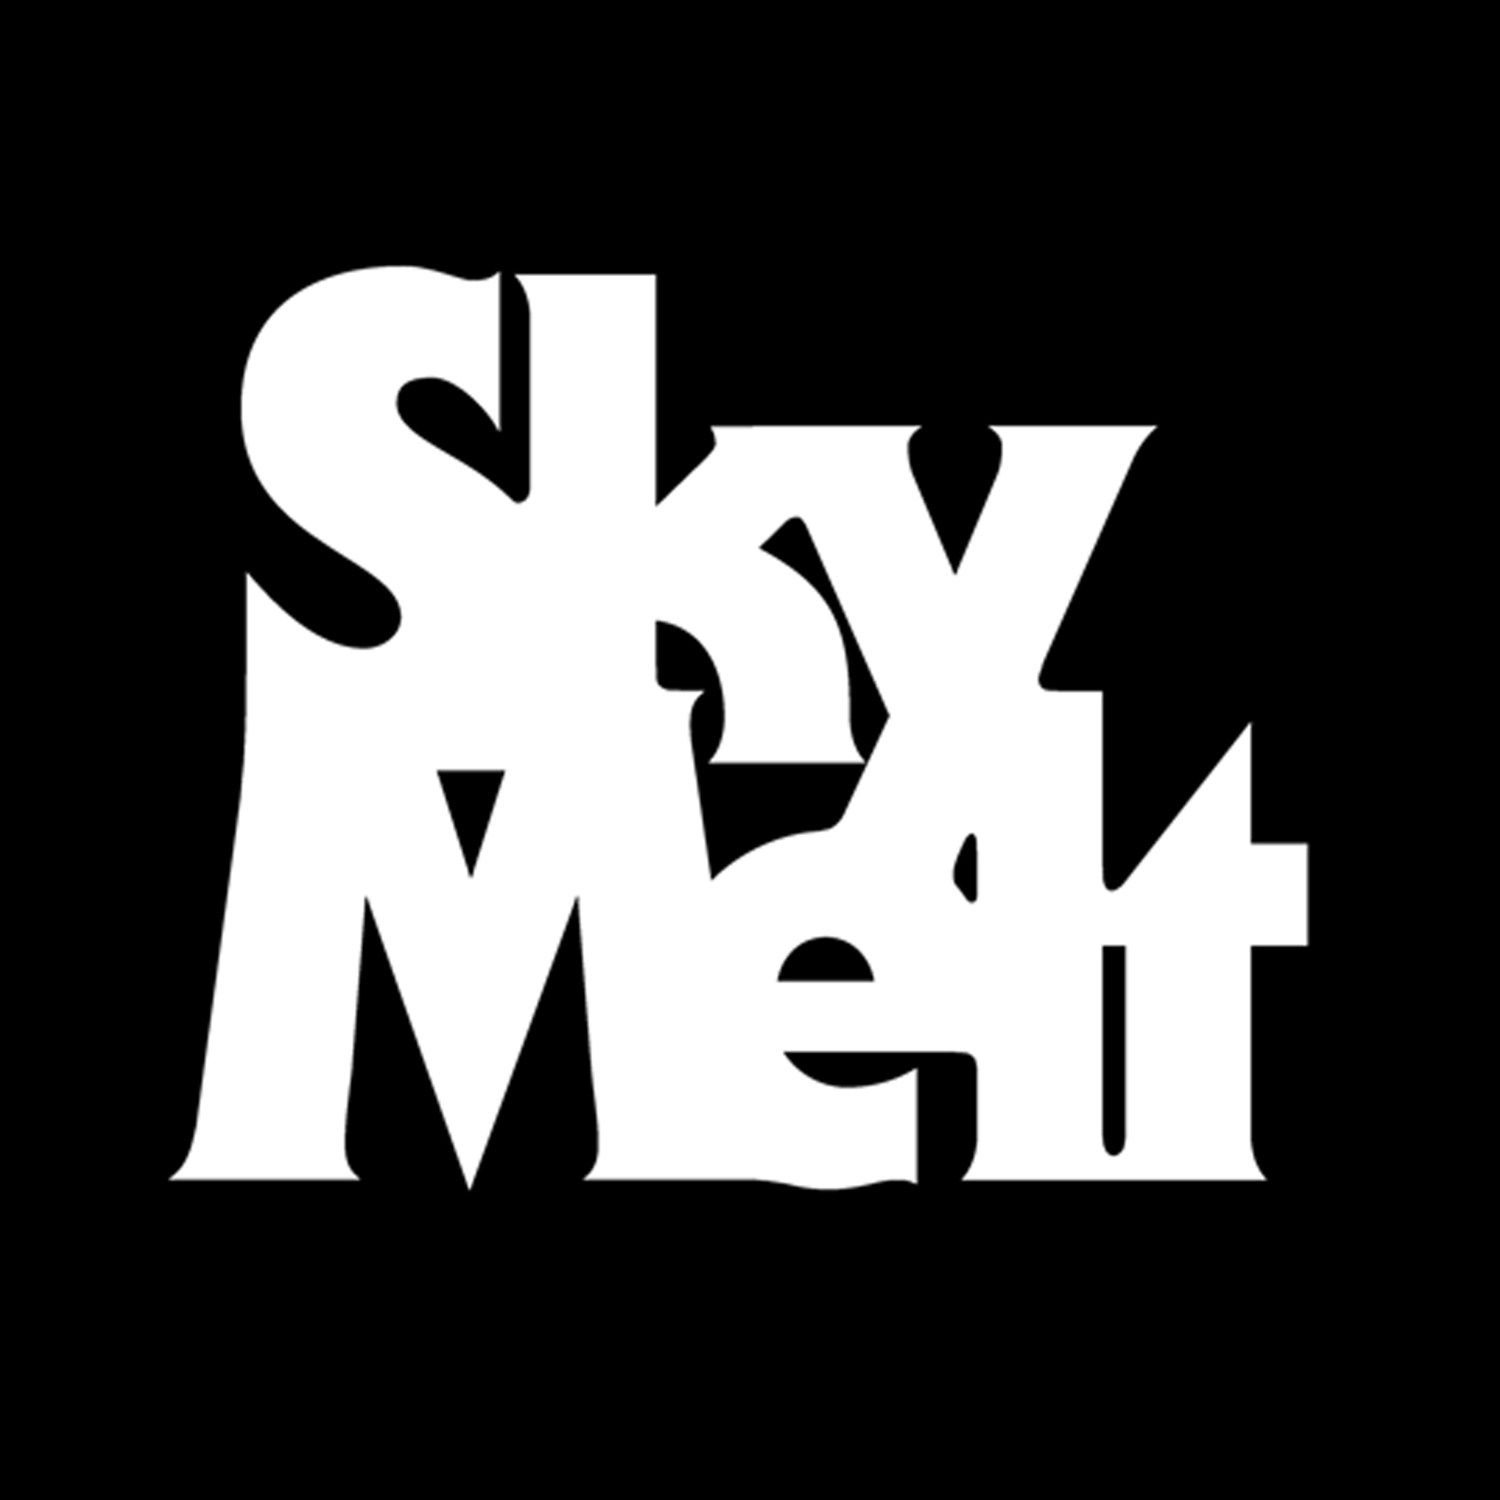 Sky Melt Film